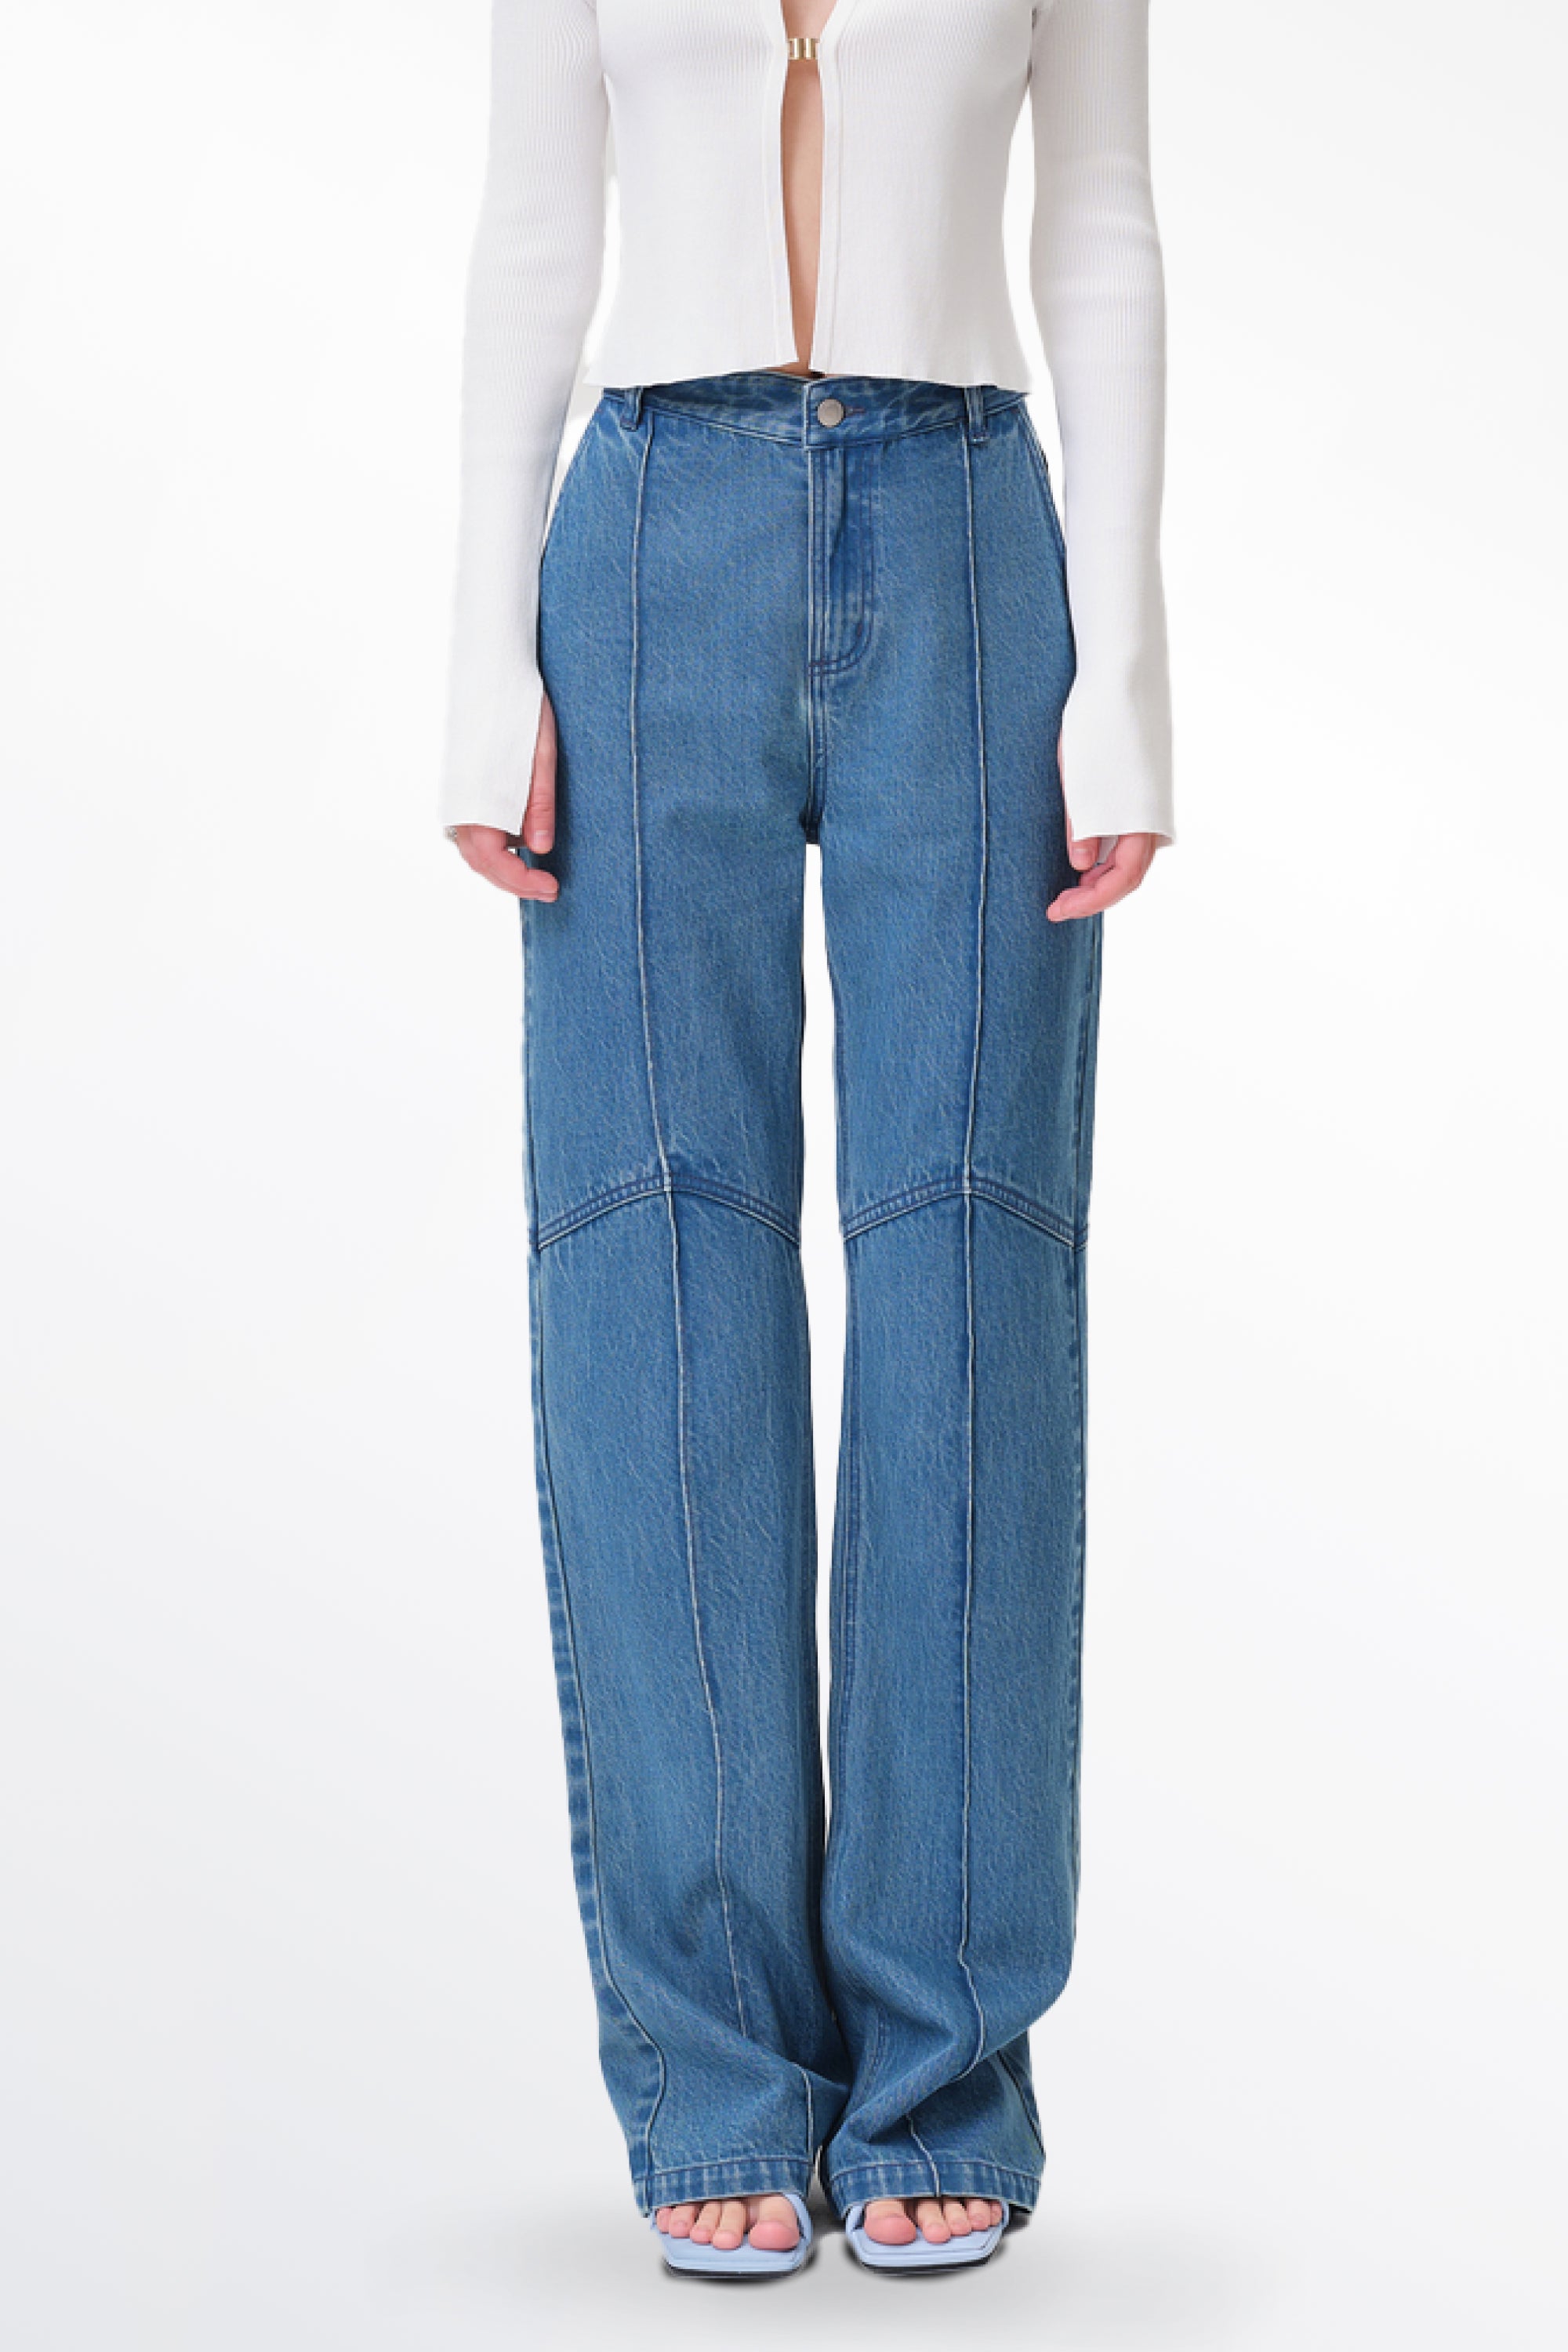 Meryl Patchwork Baggy Jeans in Tencel Lyocell Denim Blend